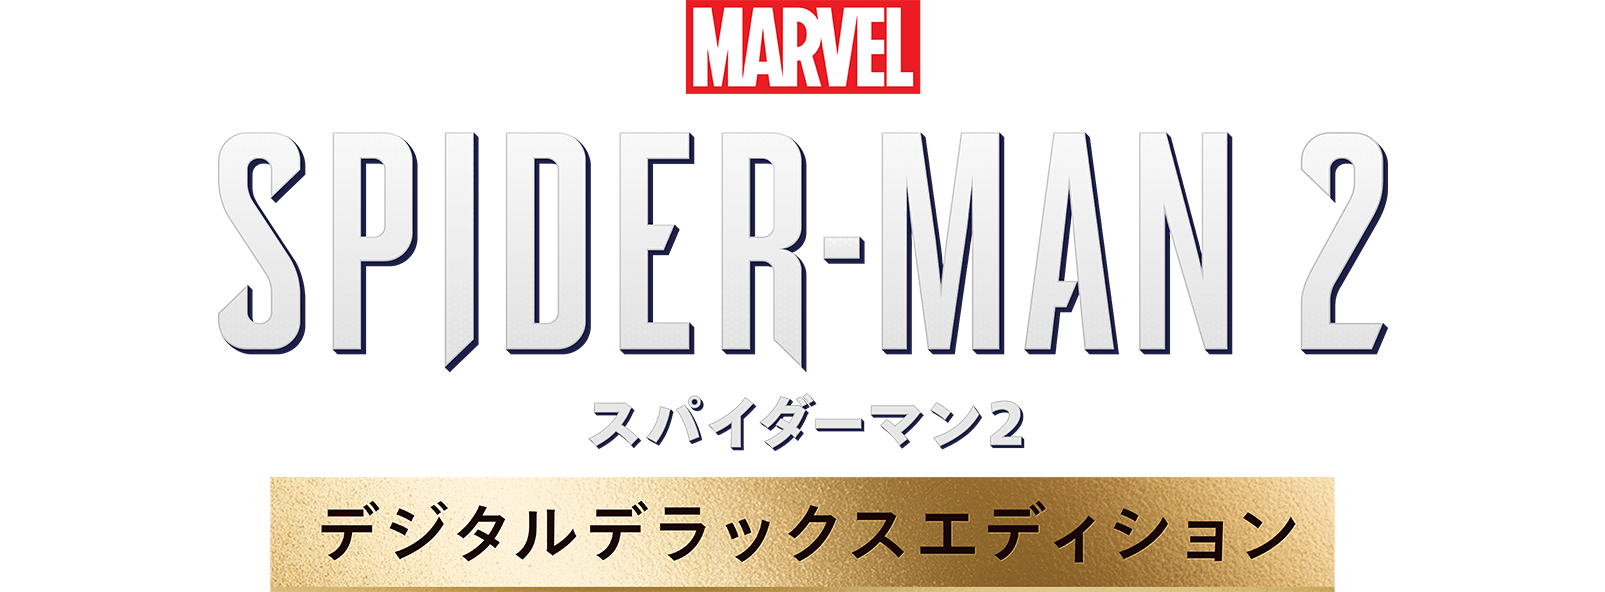 Marvel's Spider-Man 2 デラックスエディション